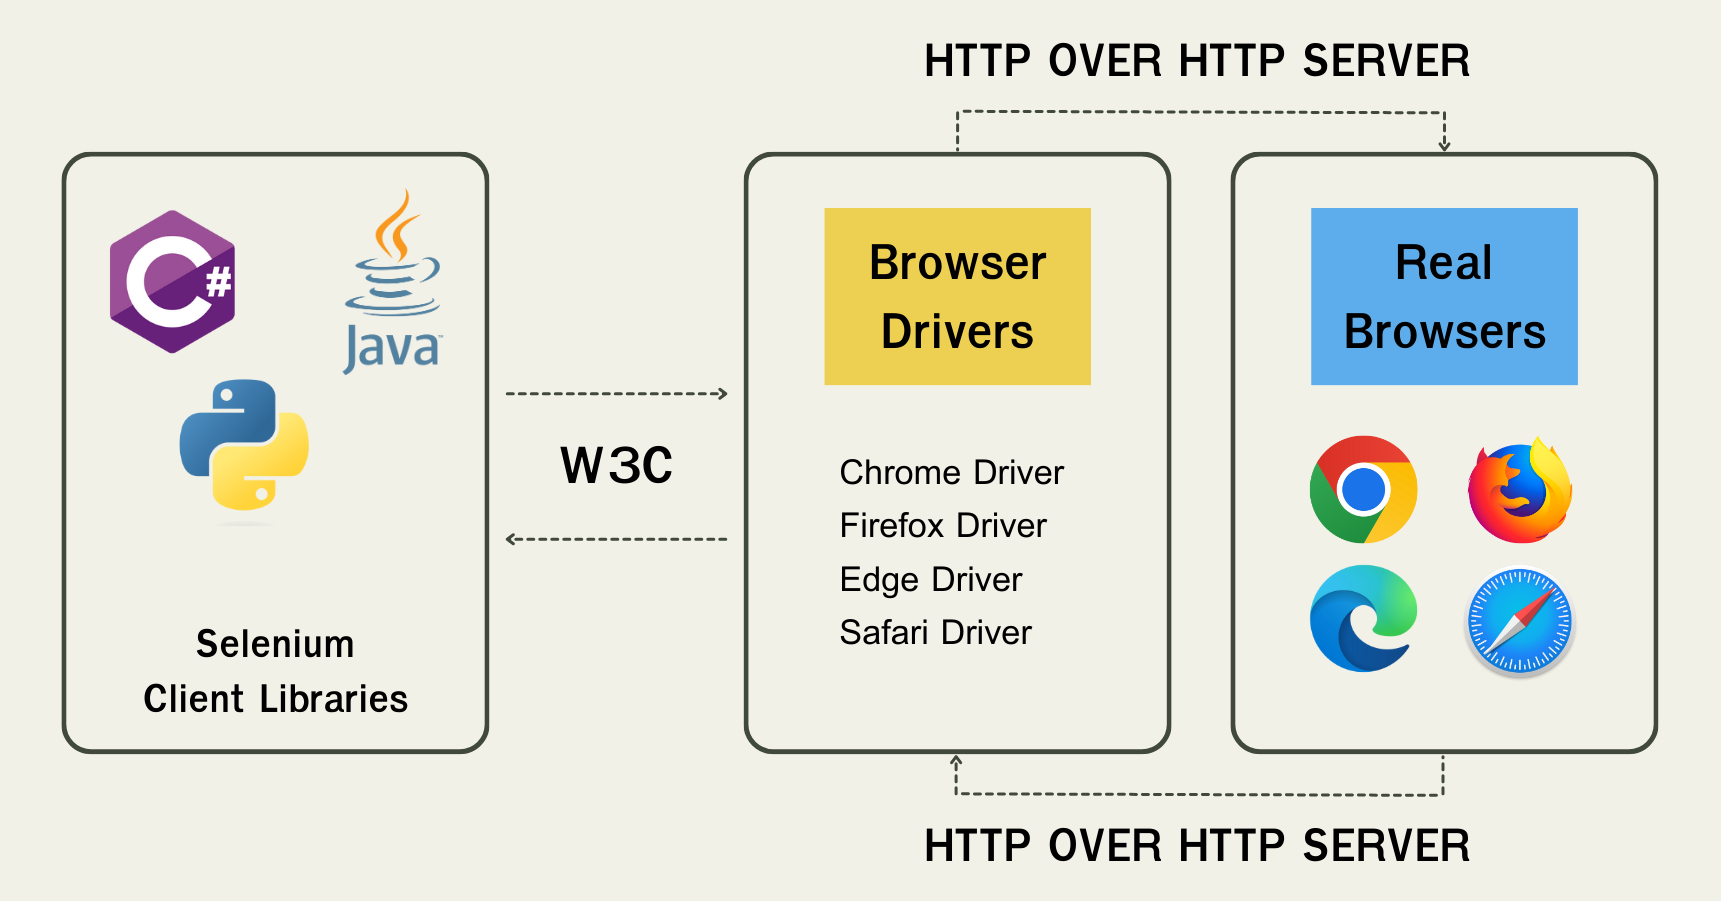 Selenium Web Driver Architecture